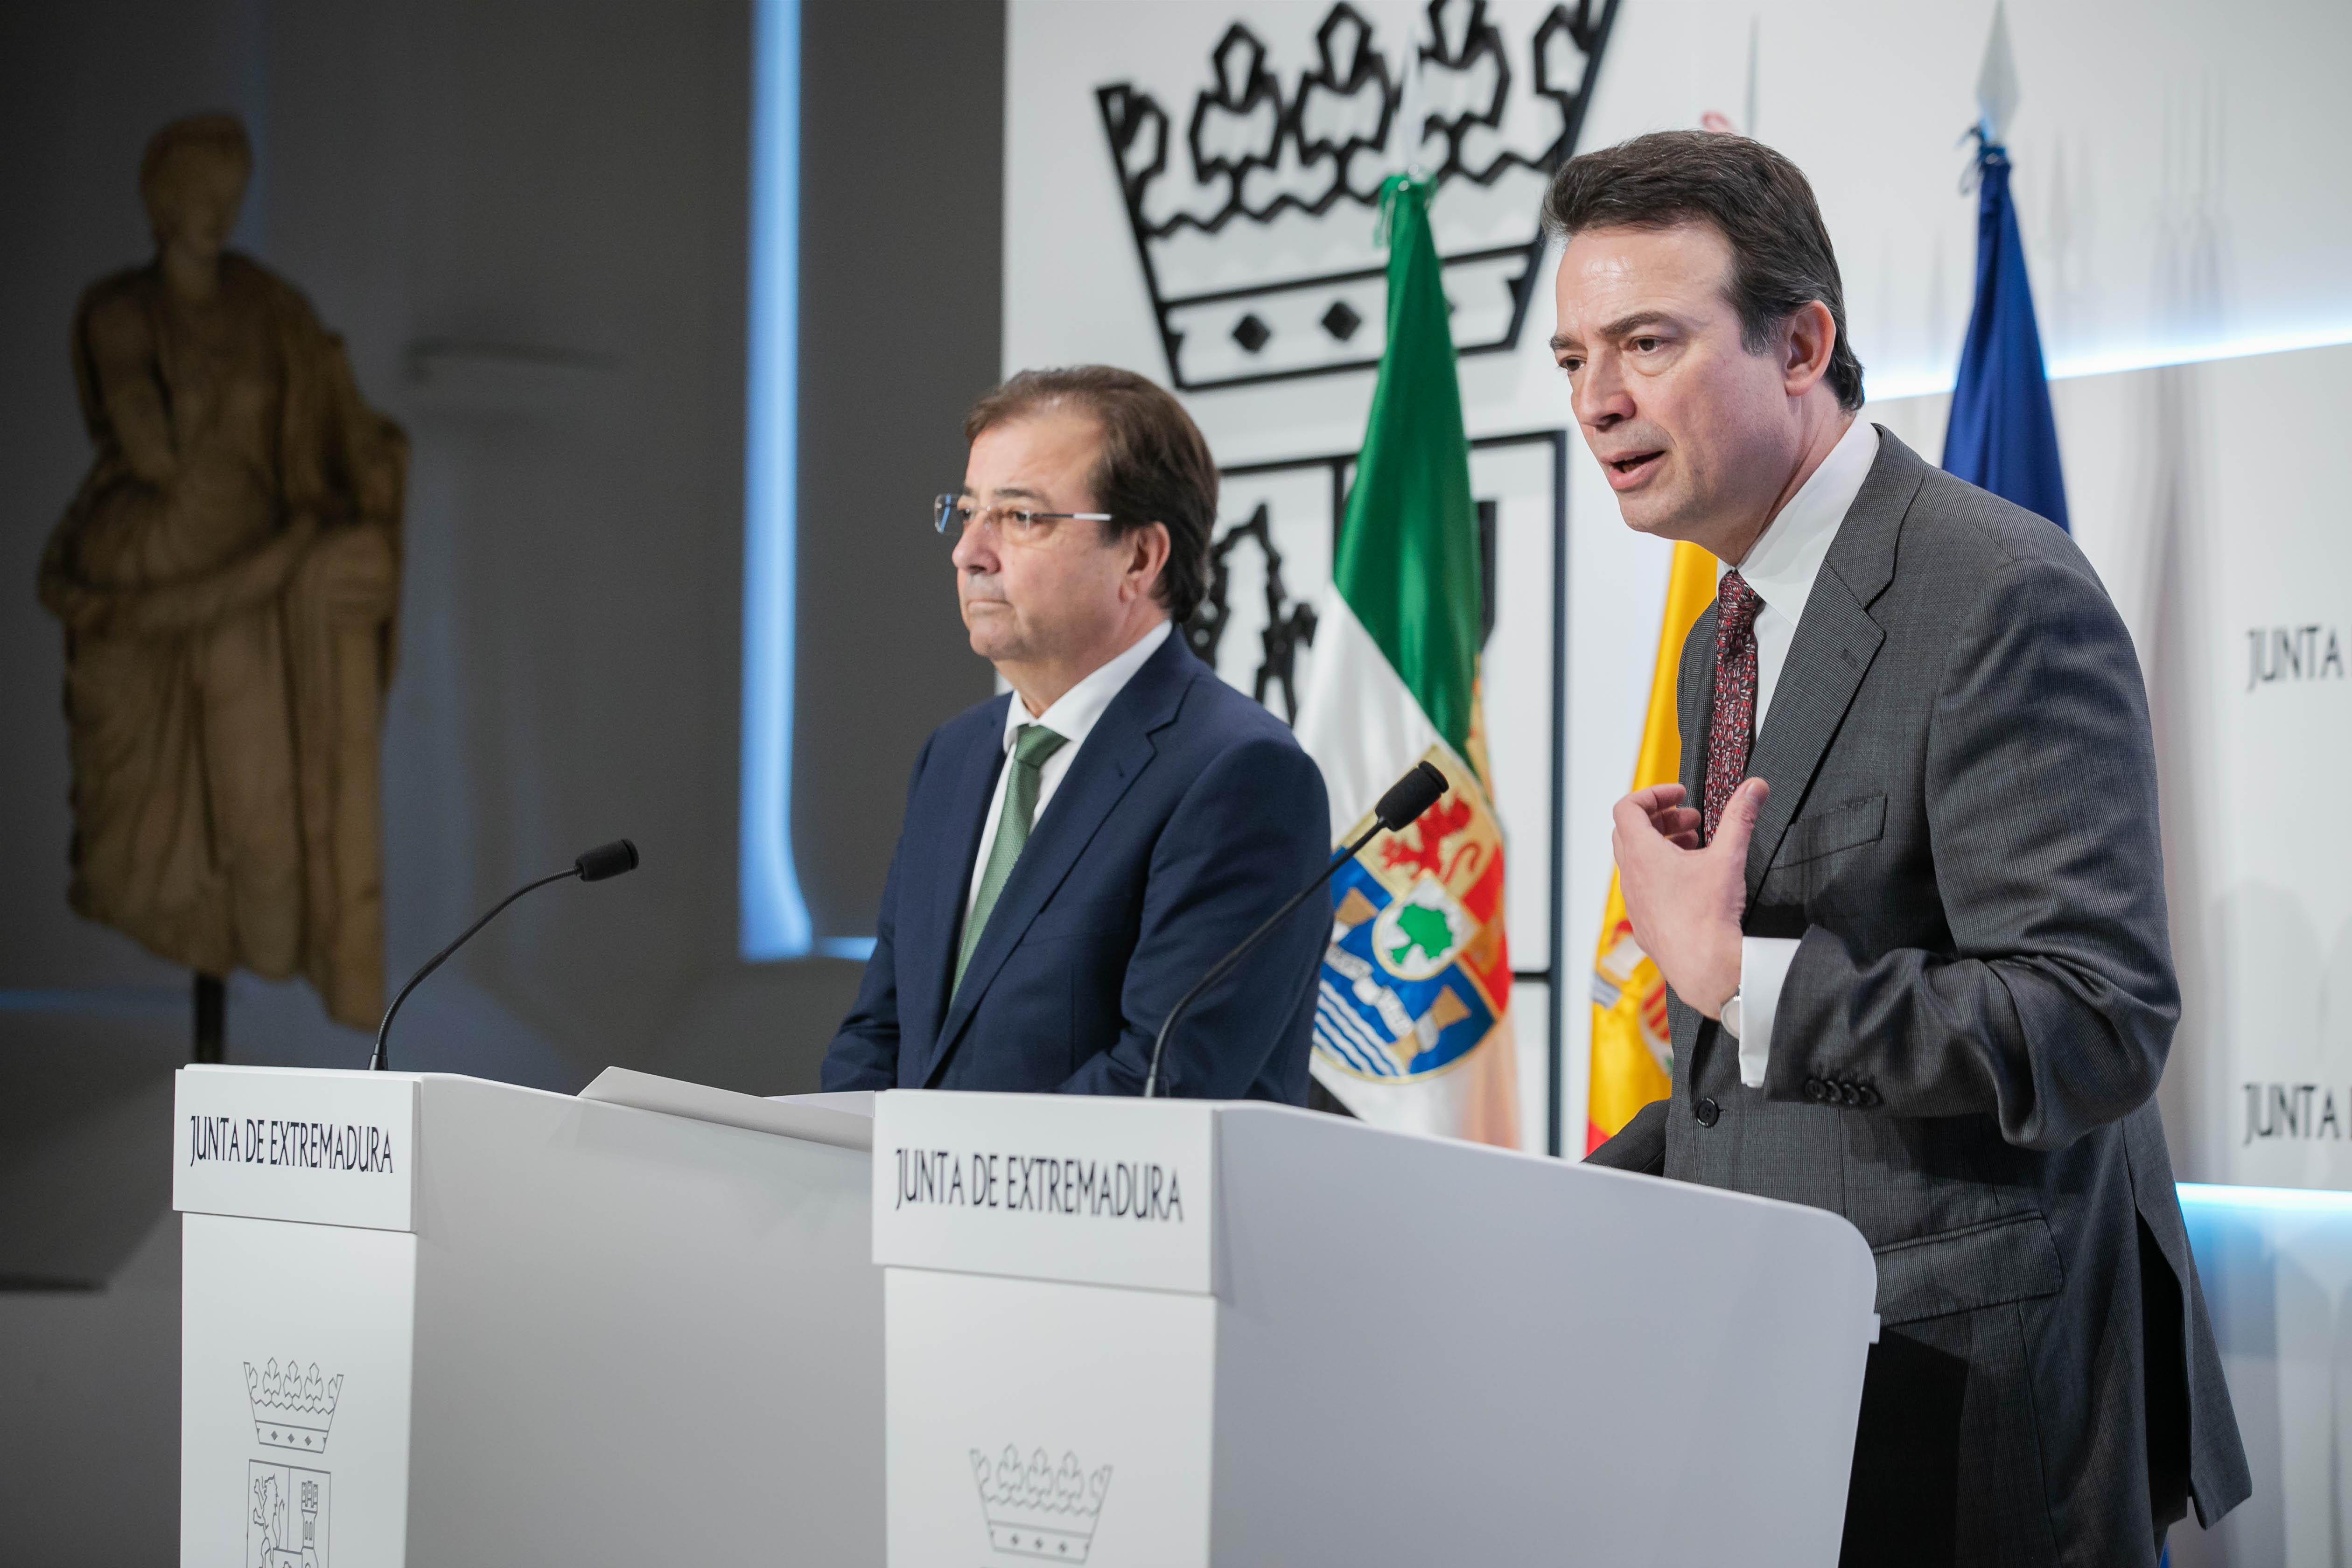 Enagás and Junta de Extremadura sign agreement